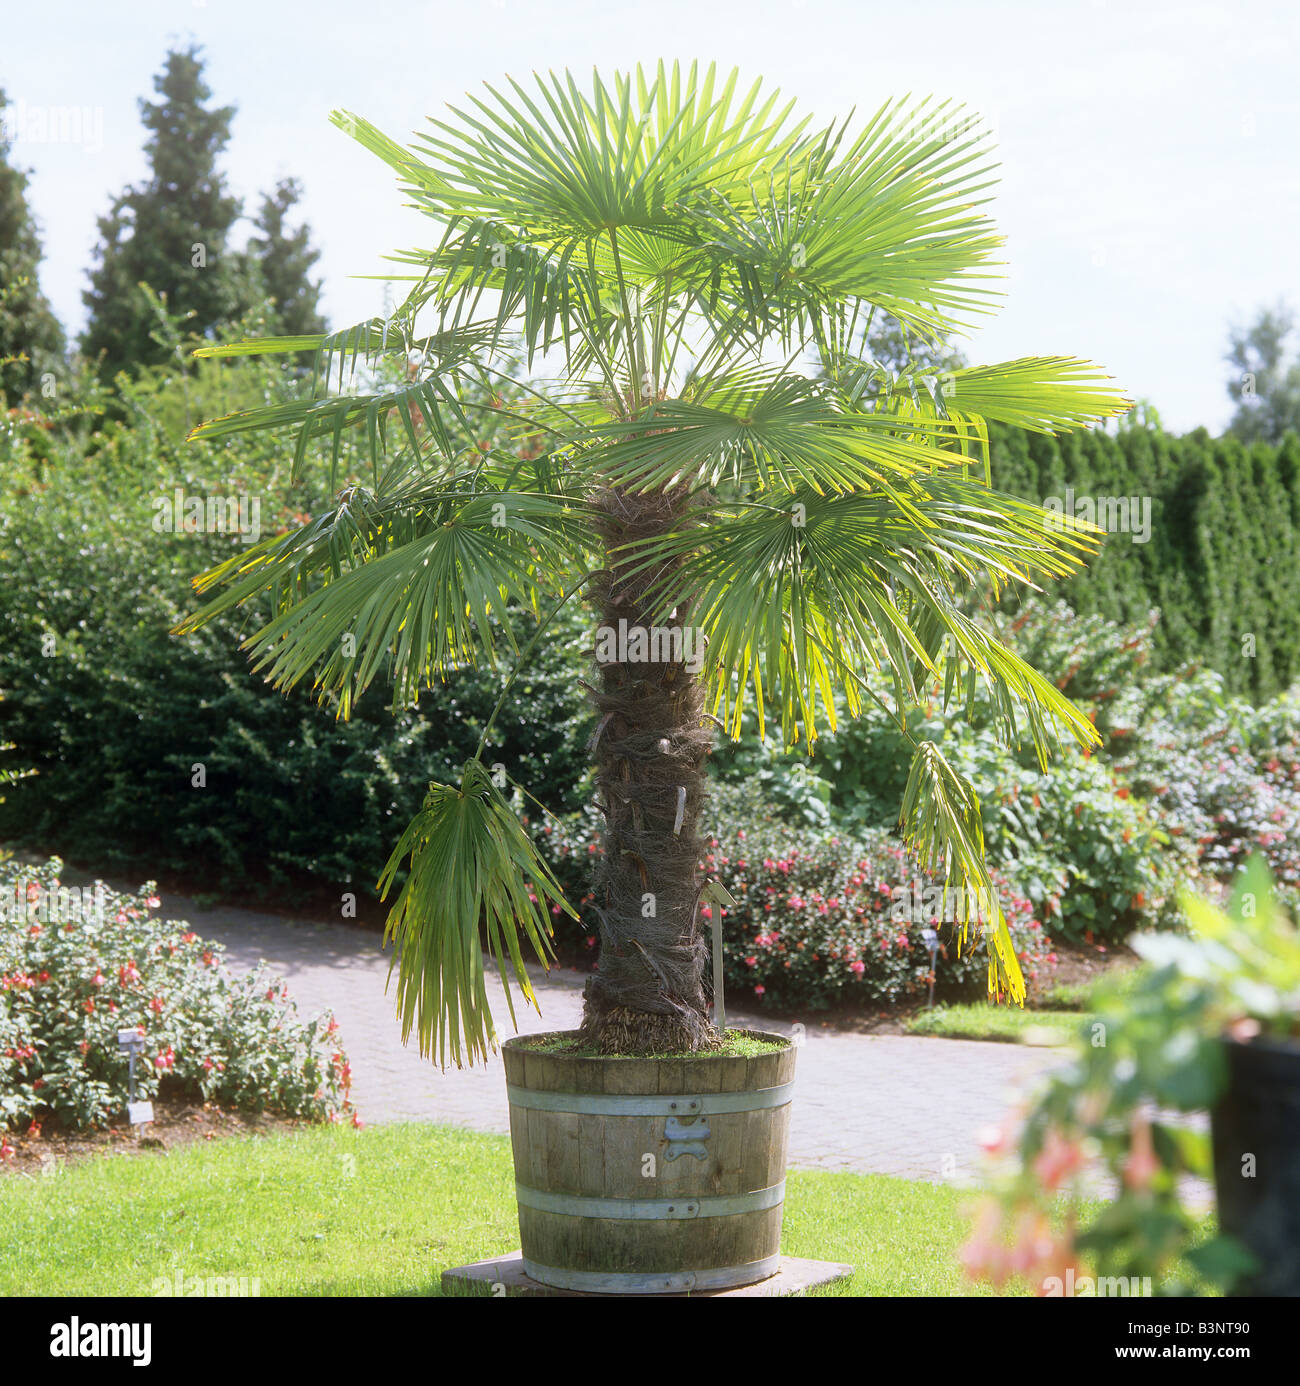 Chinese Windmill palm in pot / Trachycarpus fortunei Stock Photo - Alamy